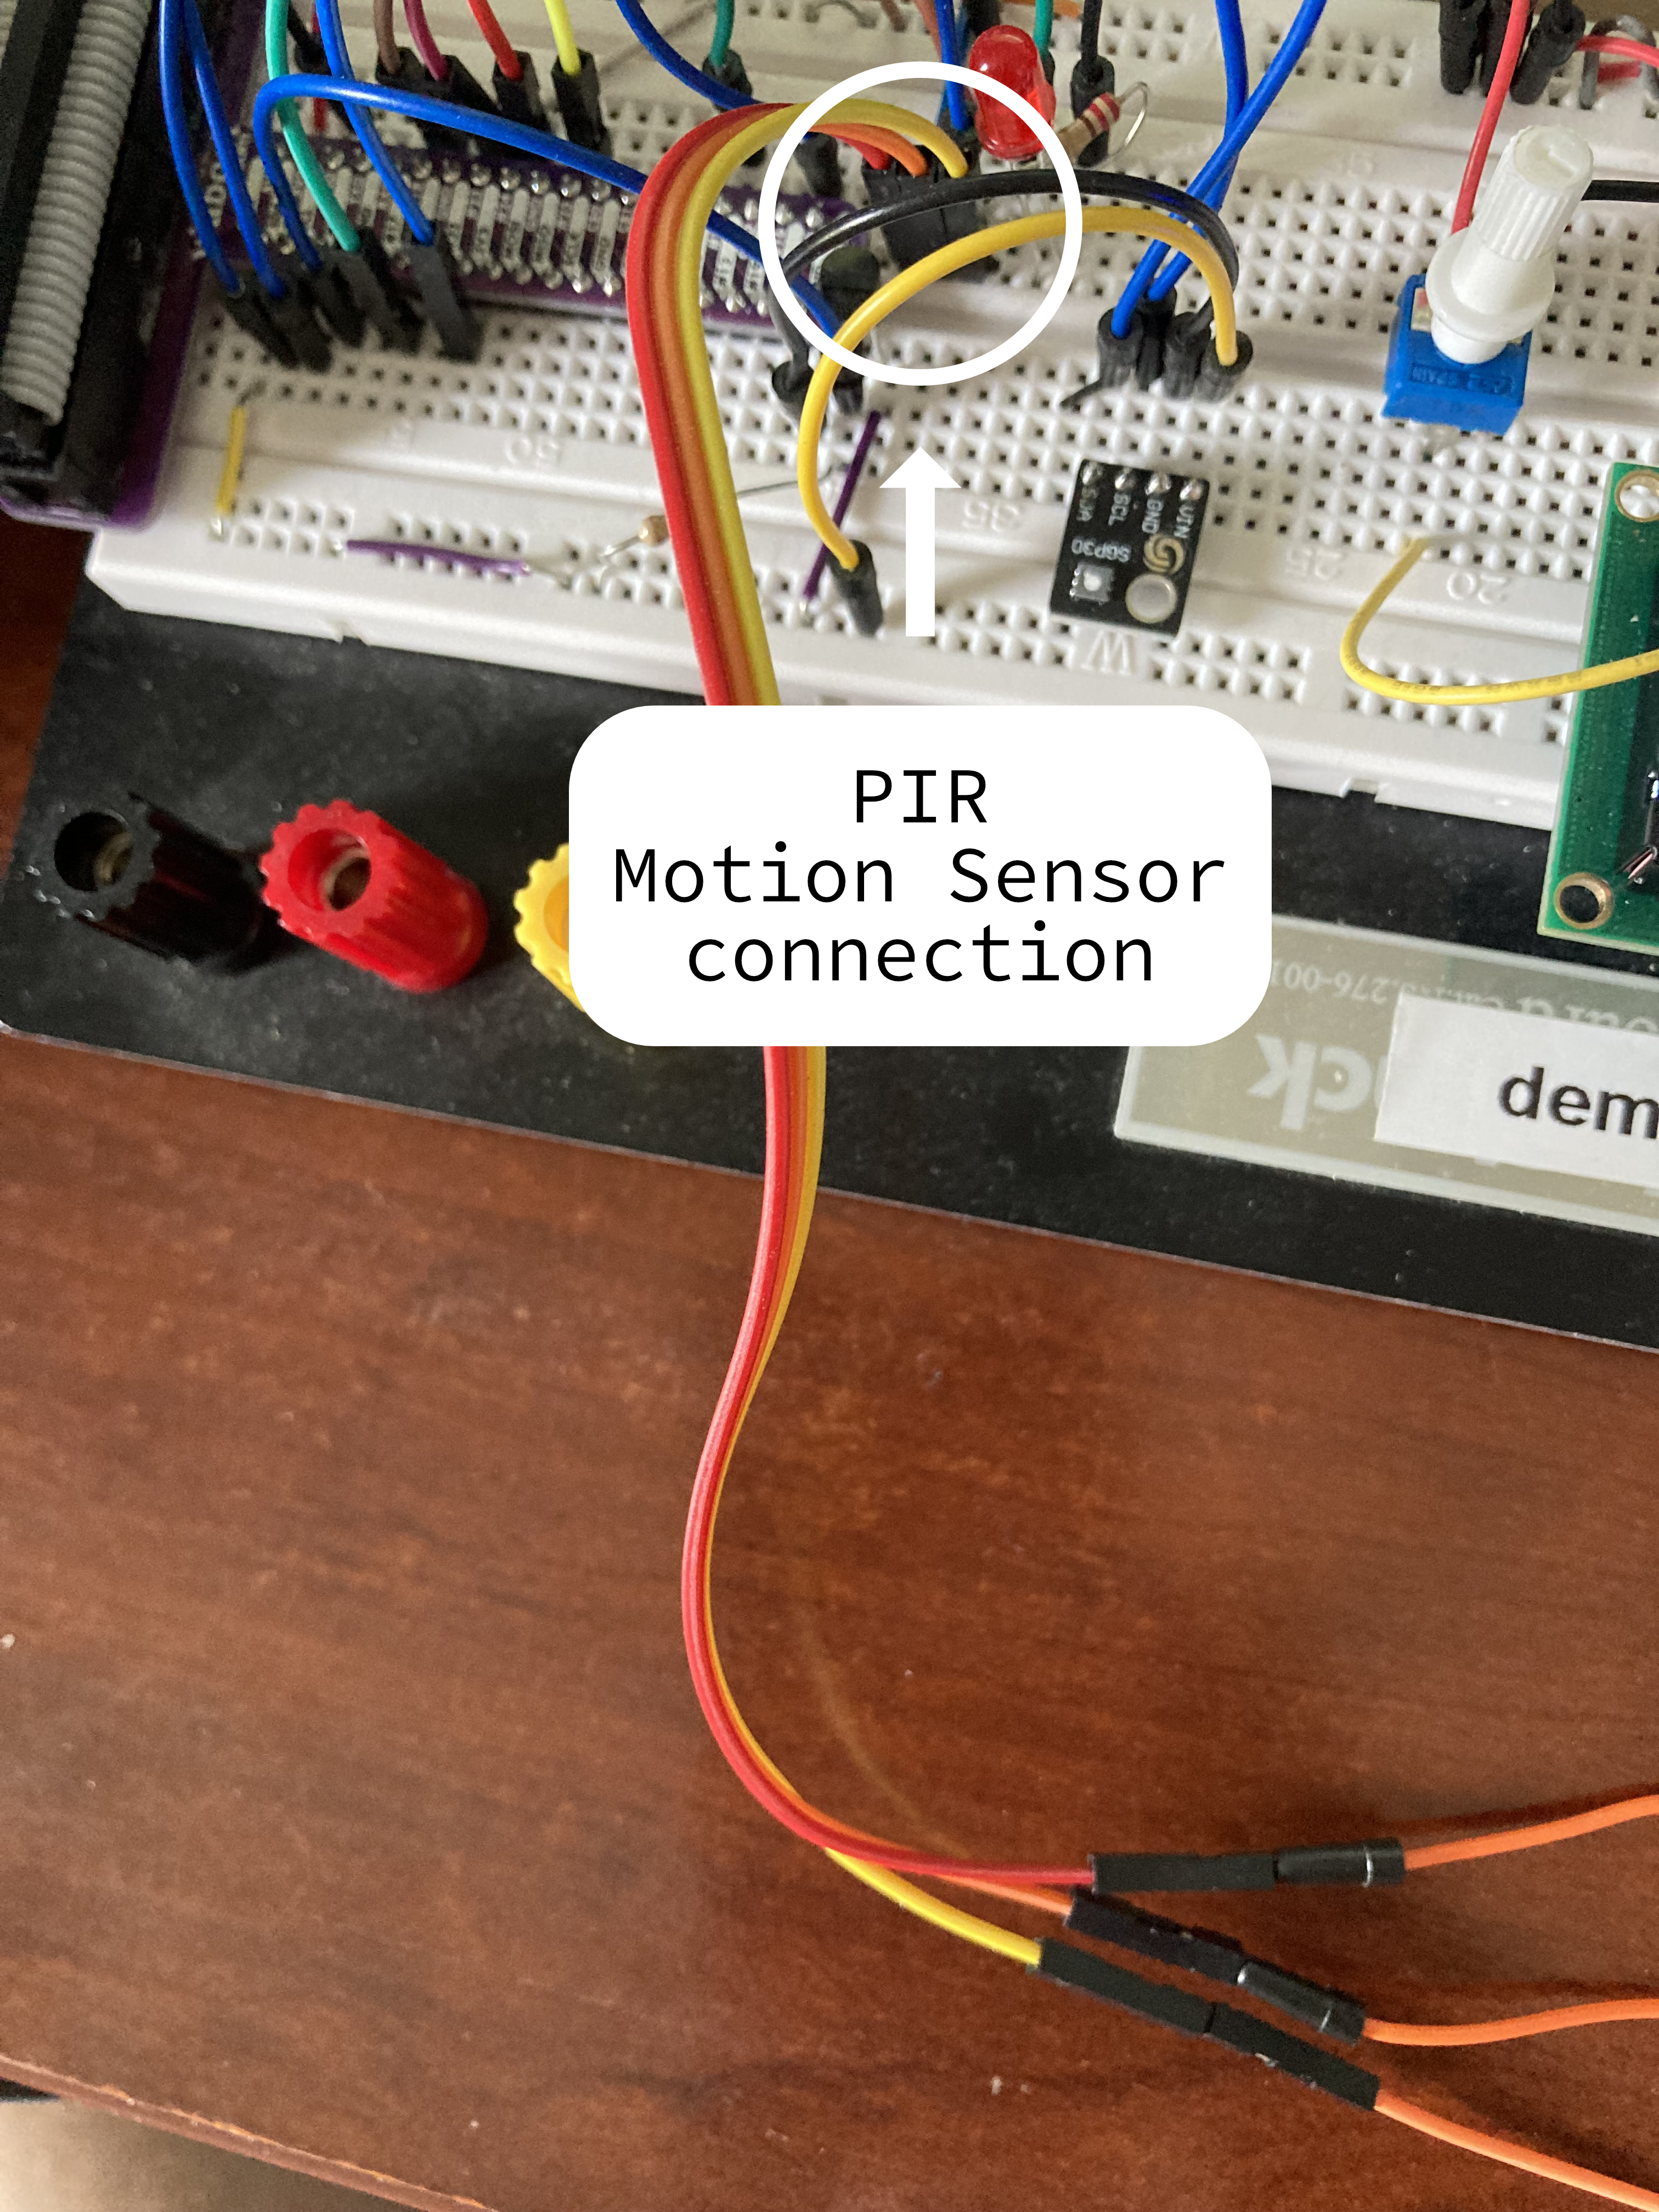 PIR motion sensor connections